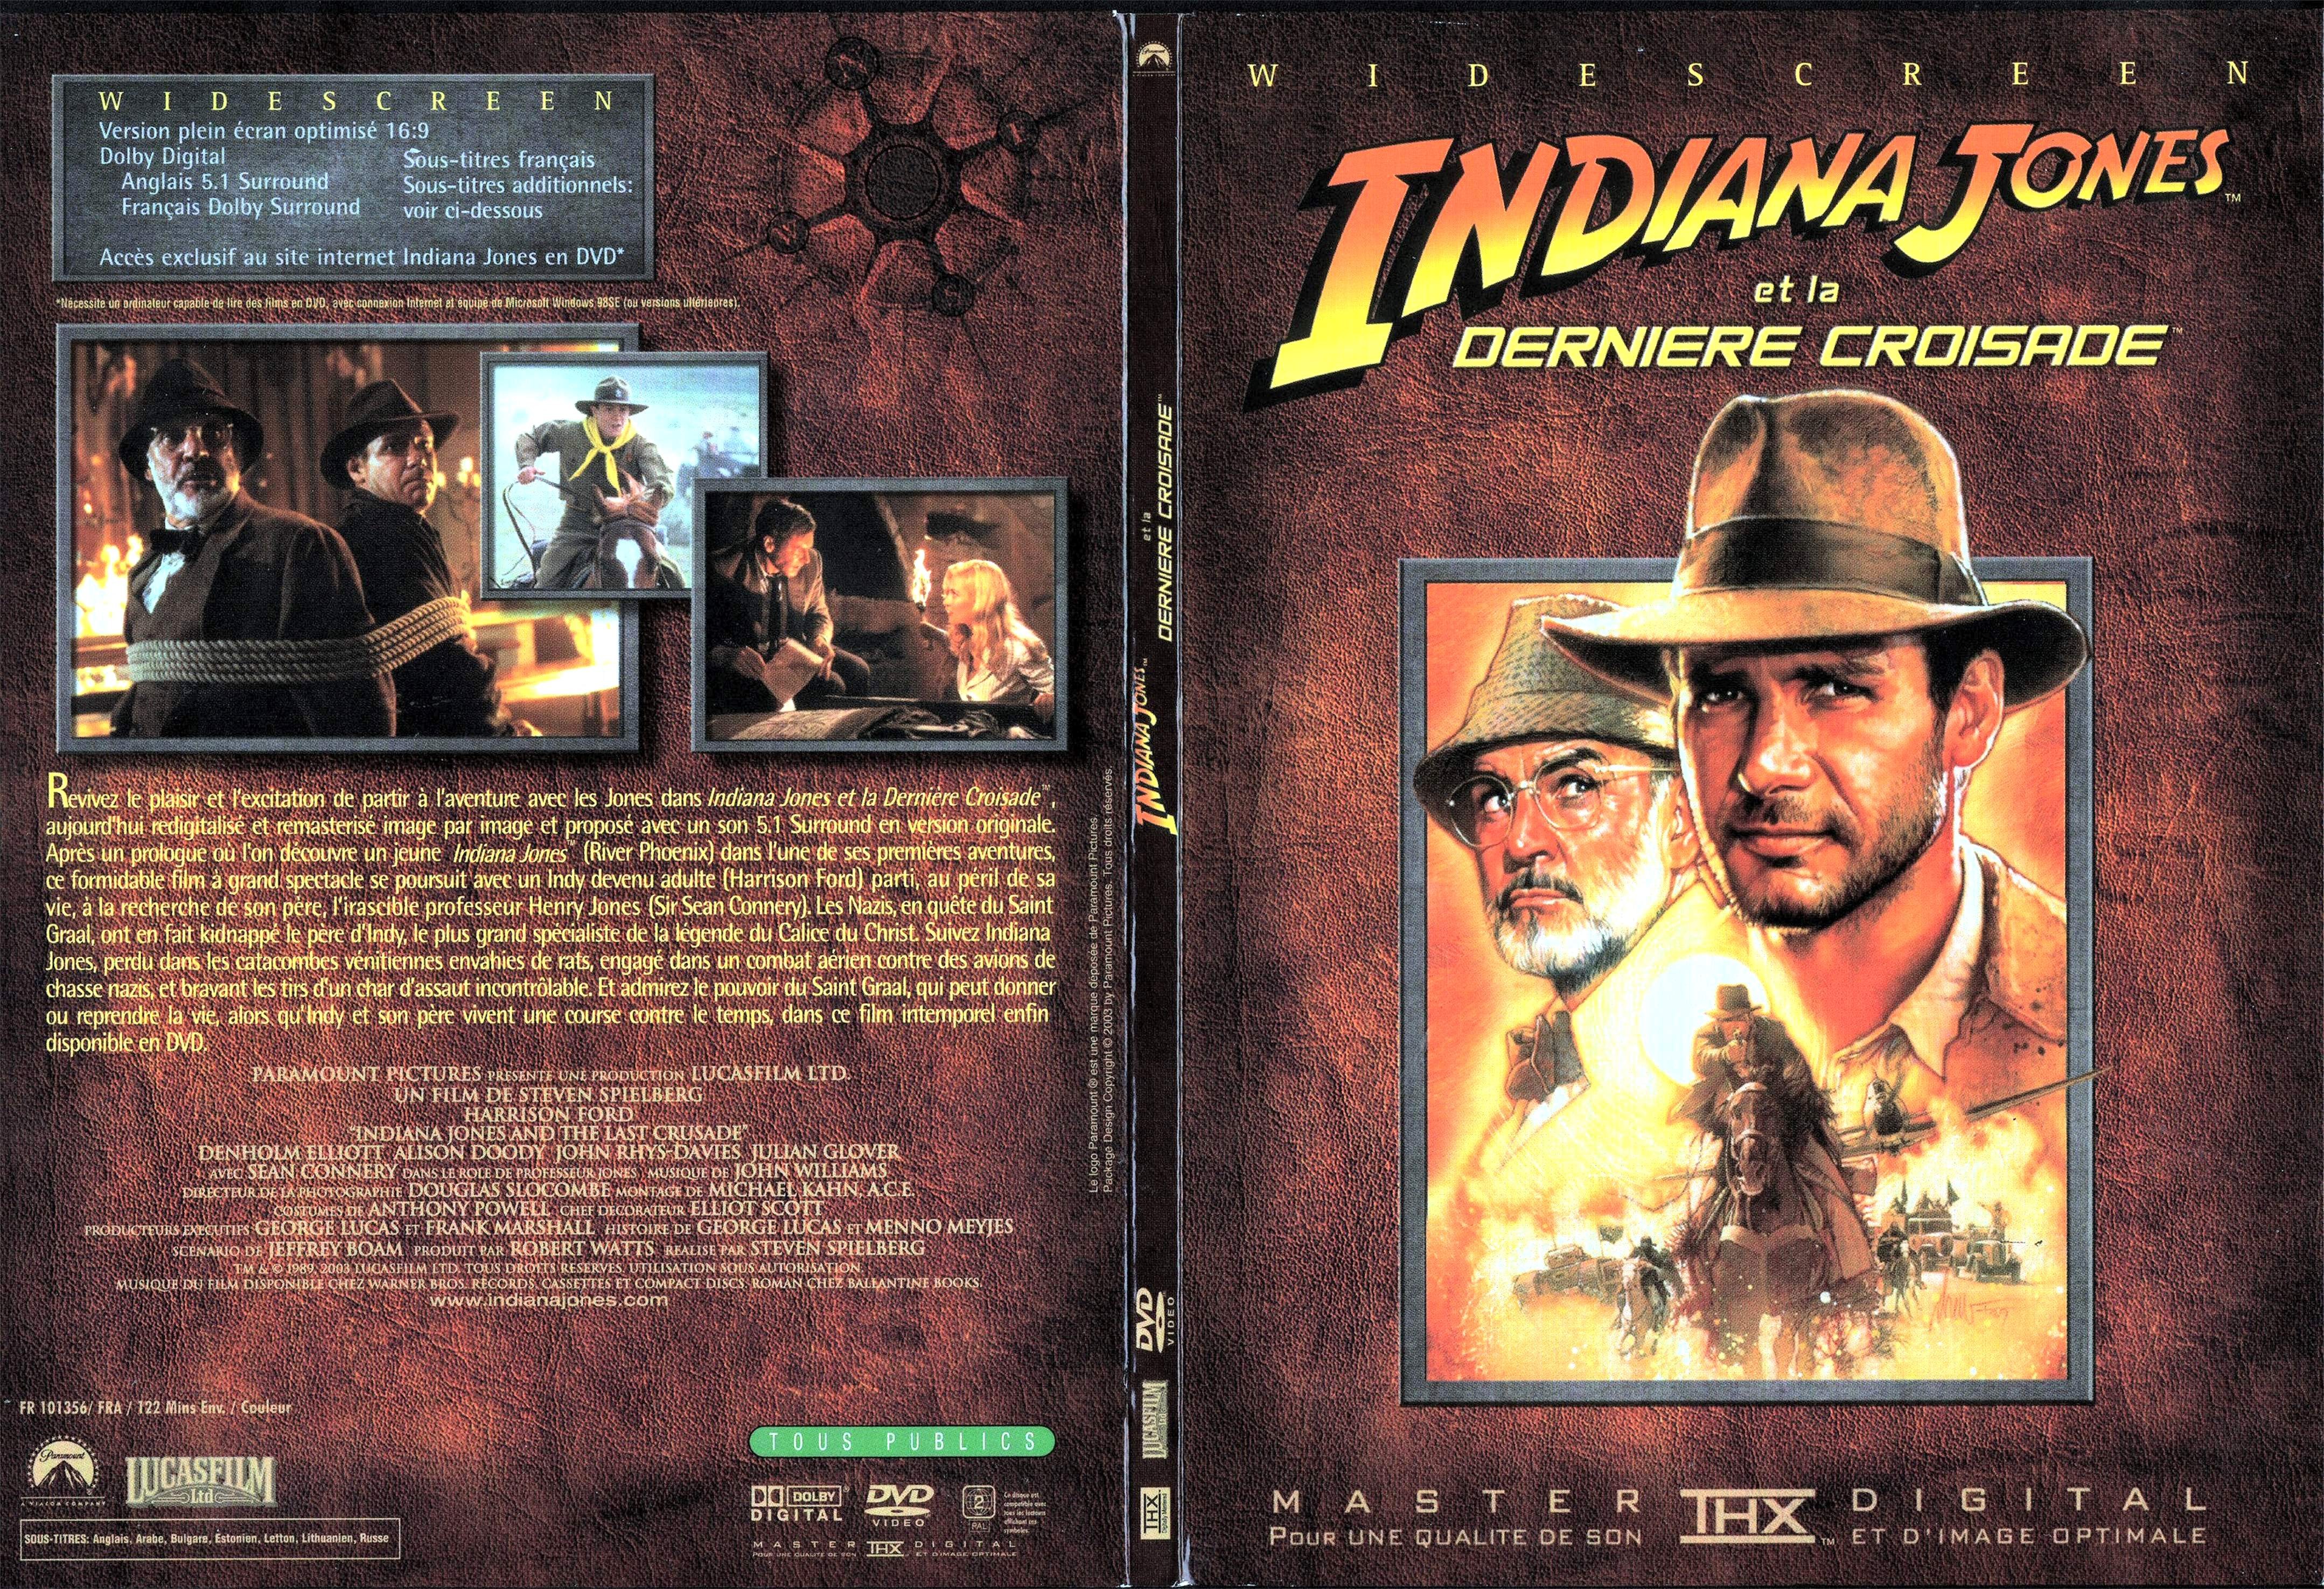 Jaquette DVD Indiana jones et la derniere croisade - SLIM